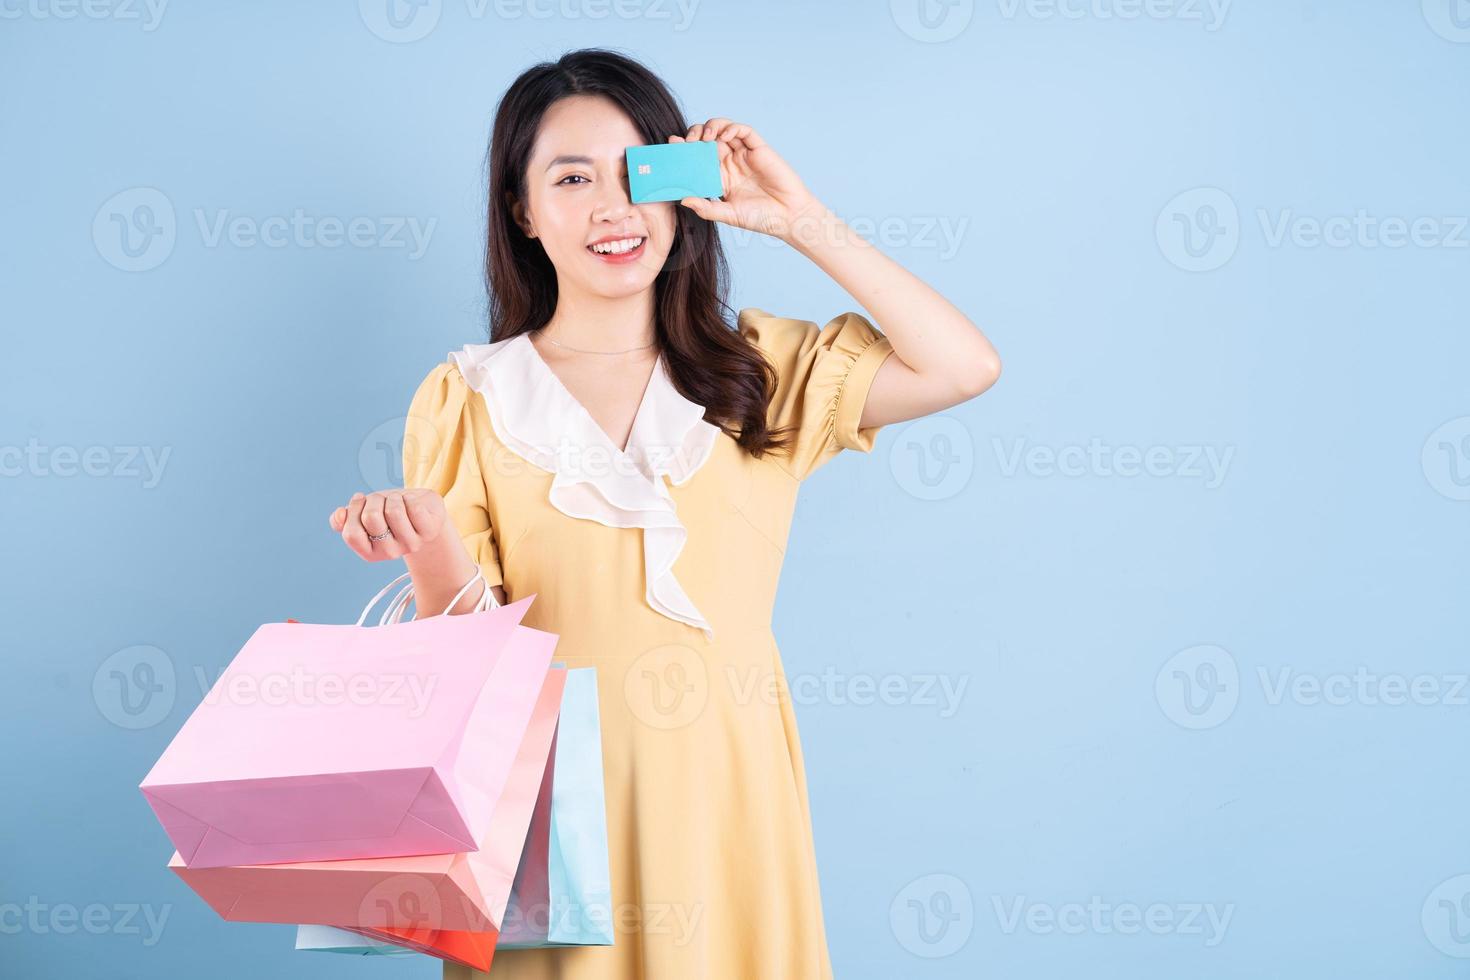 vacker ung asiatisk kvinna med shoppingpåse på blå bakgrund foto